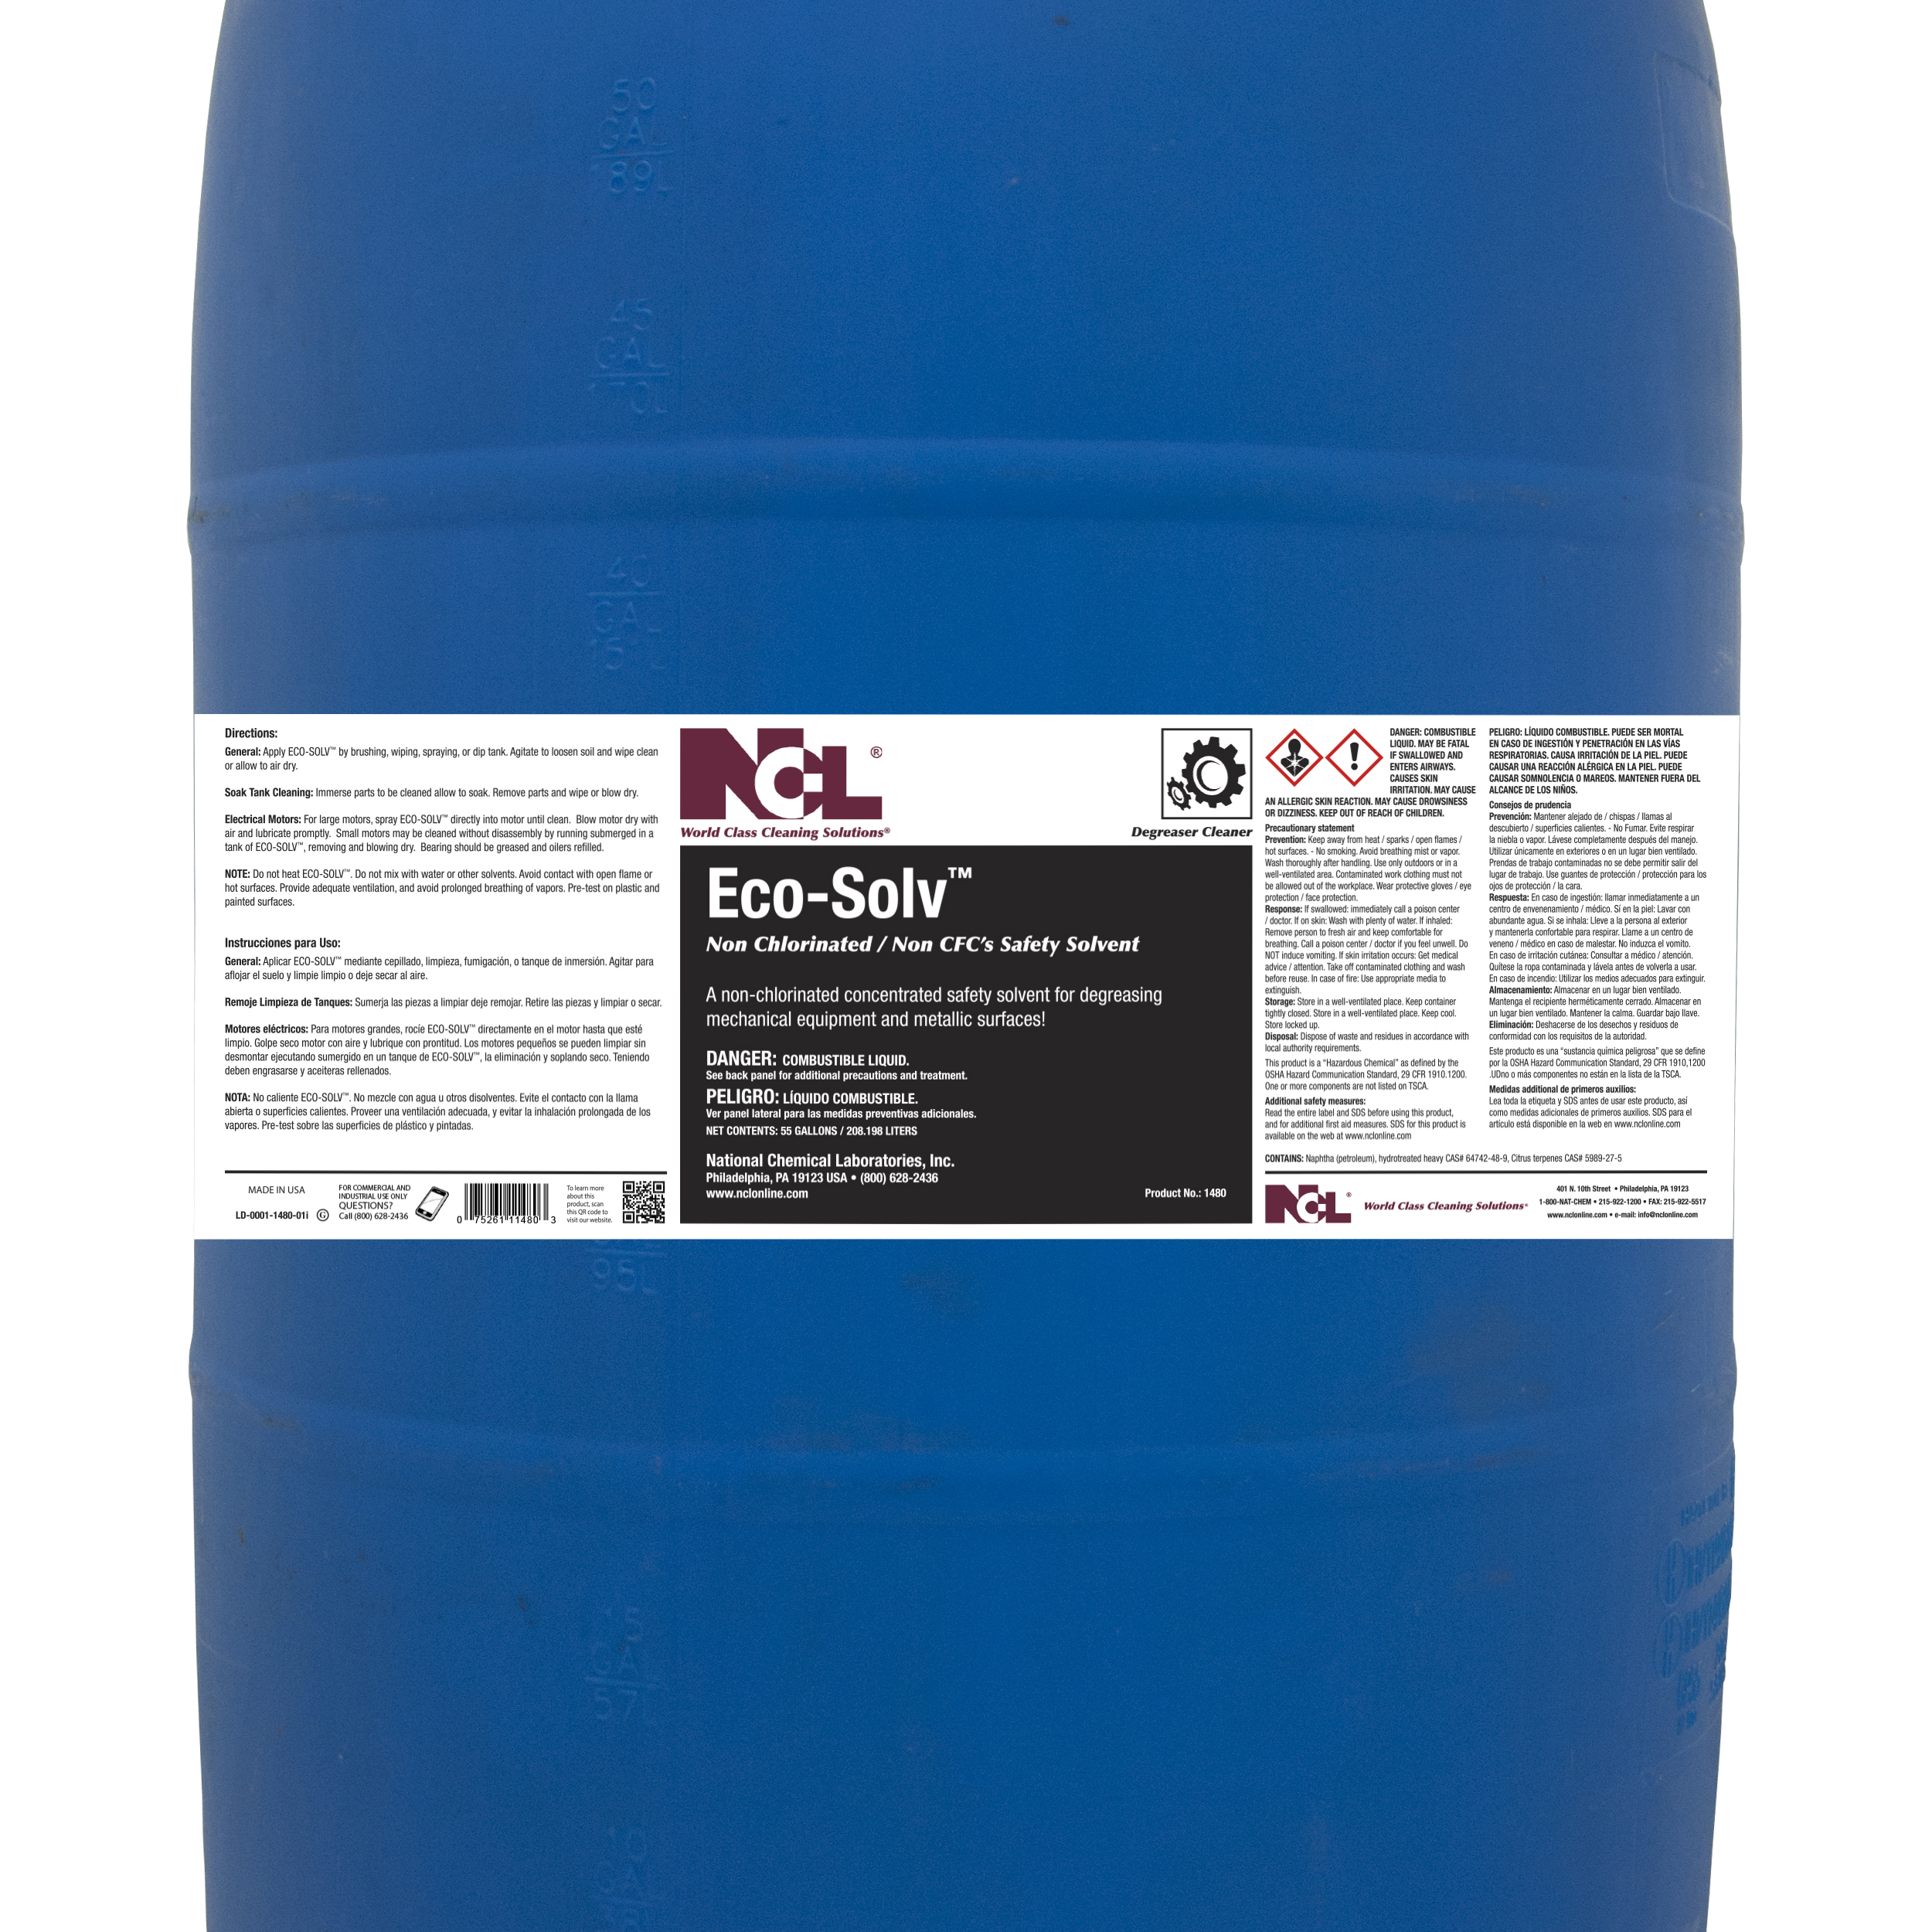  ECO-SOLV Non Chlorinated / Non CFC Safety Solvent 55 Gallon Drum (NCL1480-01) 